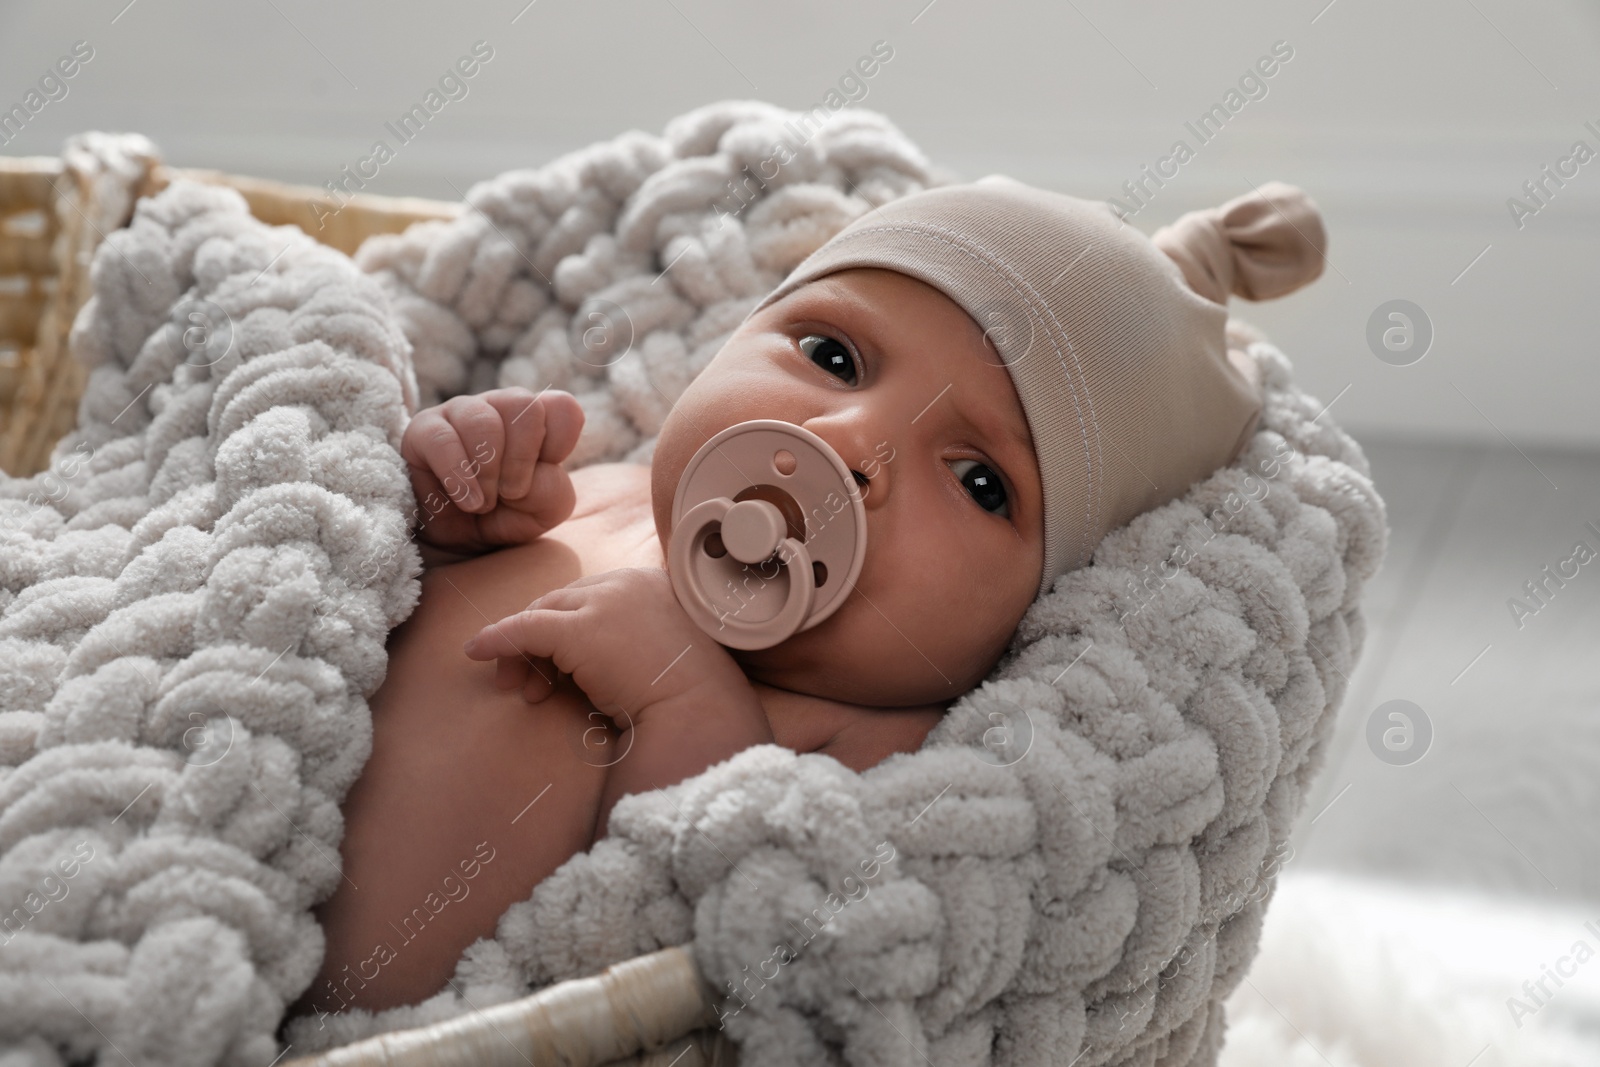 Photo of Adorable newborn baby with pacifier in wicker basket indoors